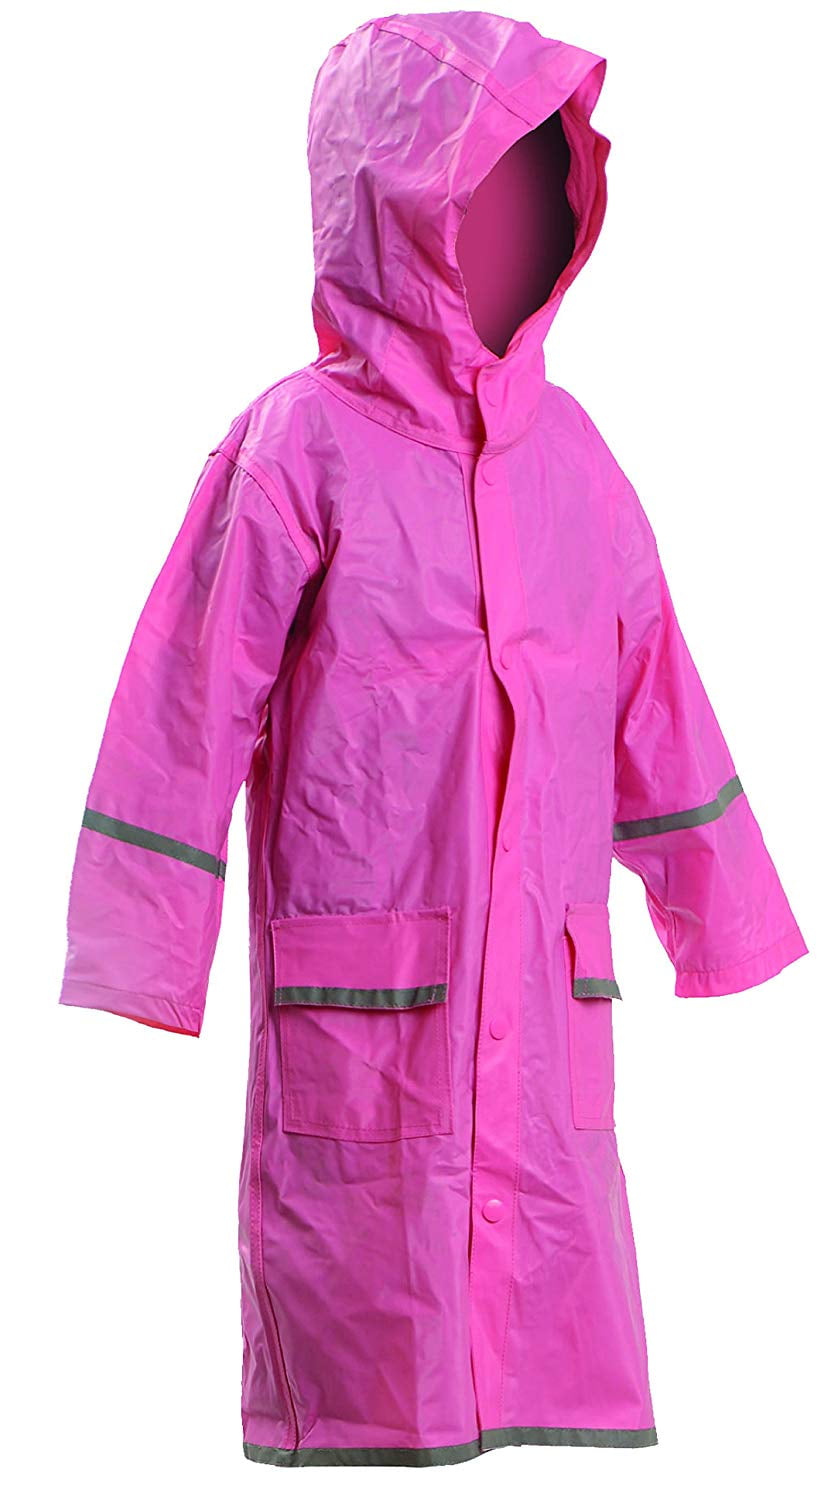 UNIFACO Girls Boys Rain Jacket Waterproof Cotton Lined Floral Printed Raincoats 2-9 Years